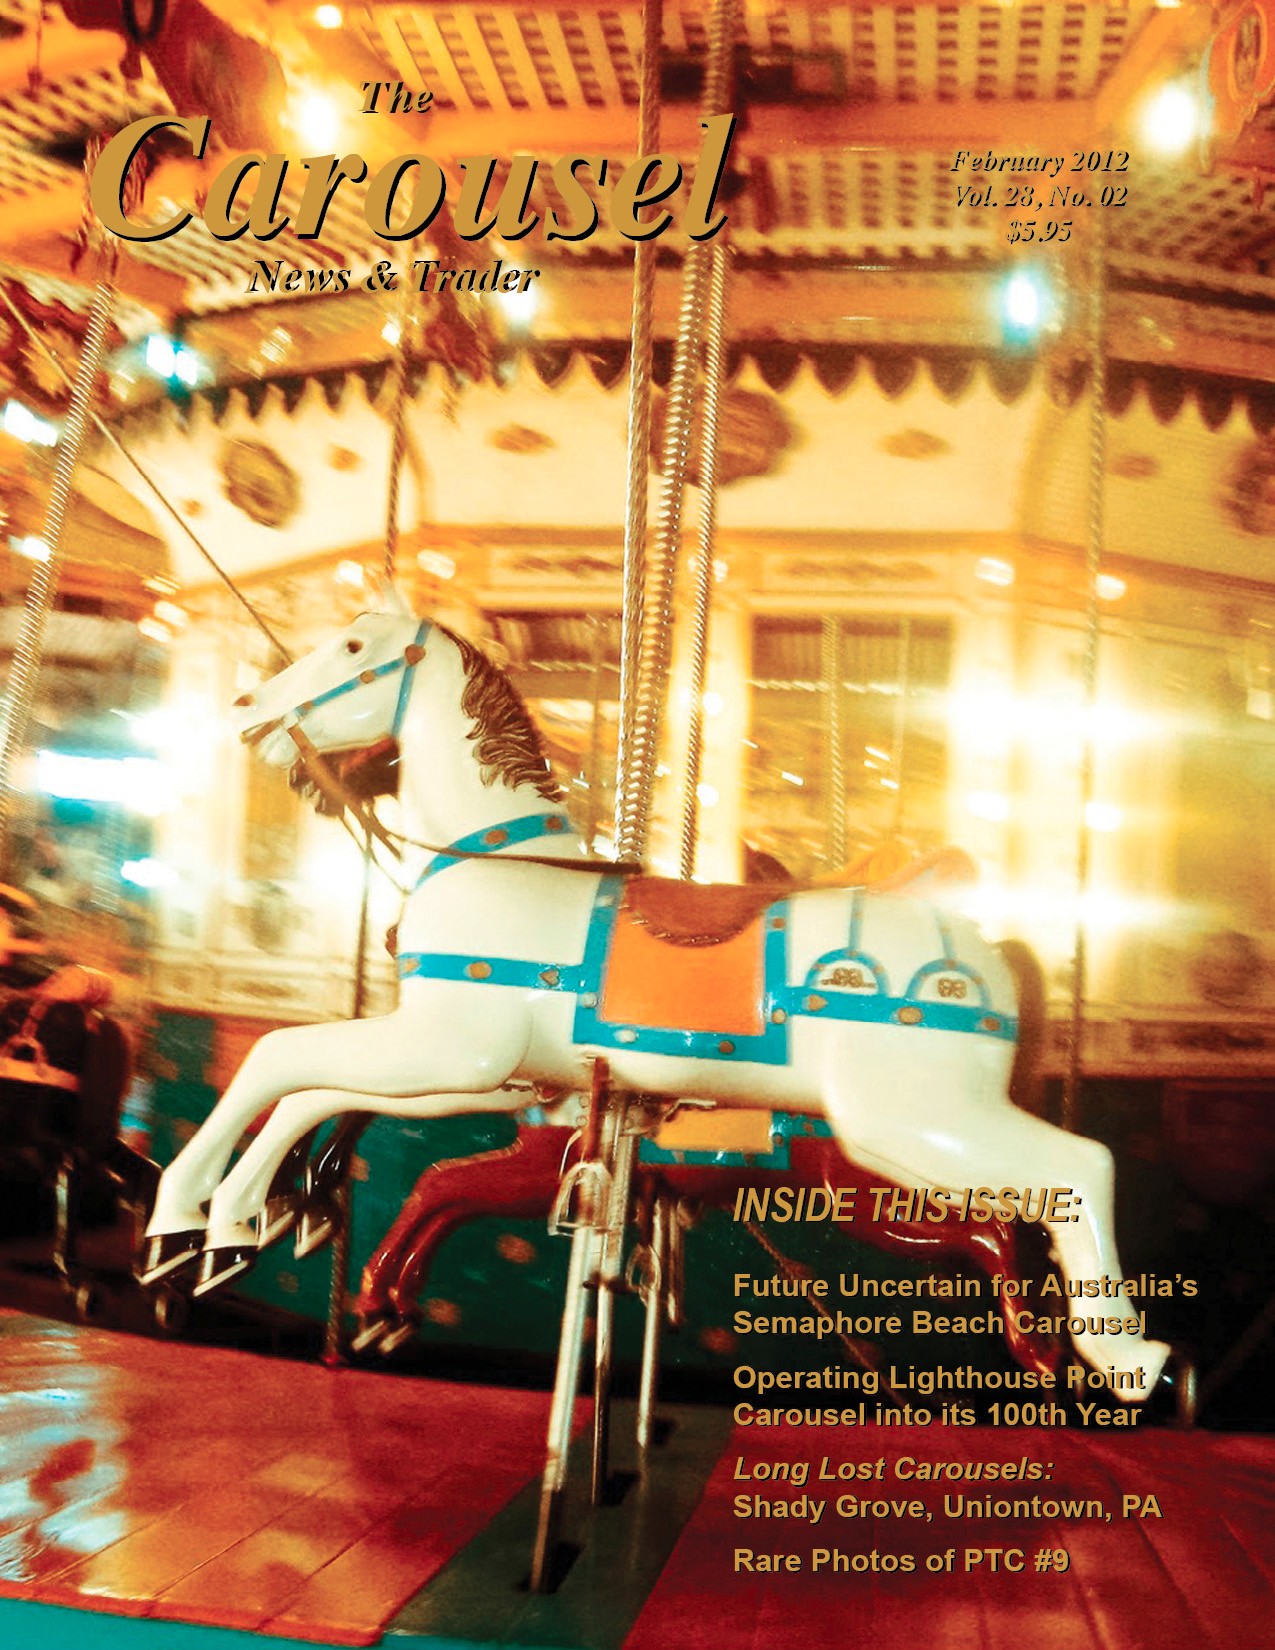 Carousel-news-cover-2-Historic-Semaphore-Australia-carousel-February-2012